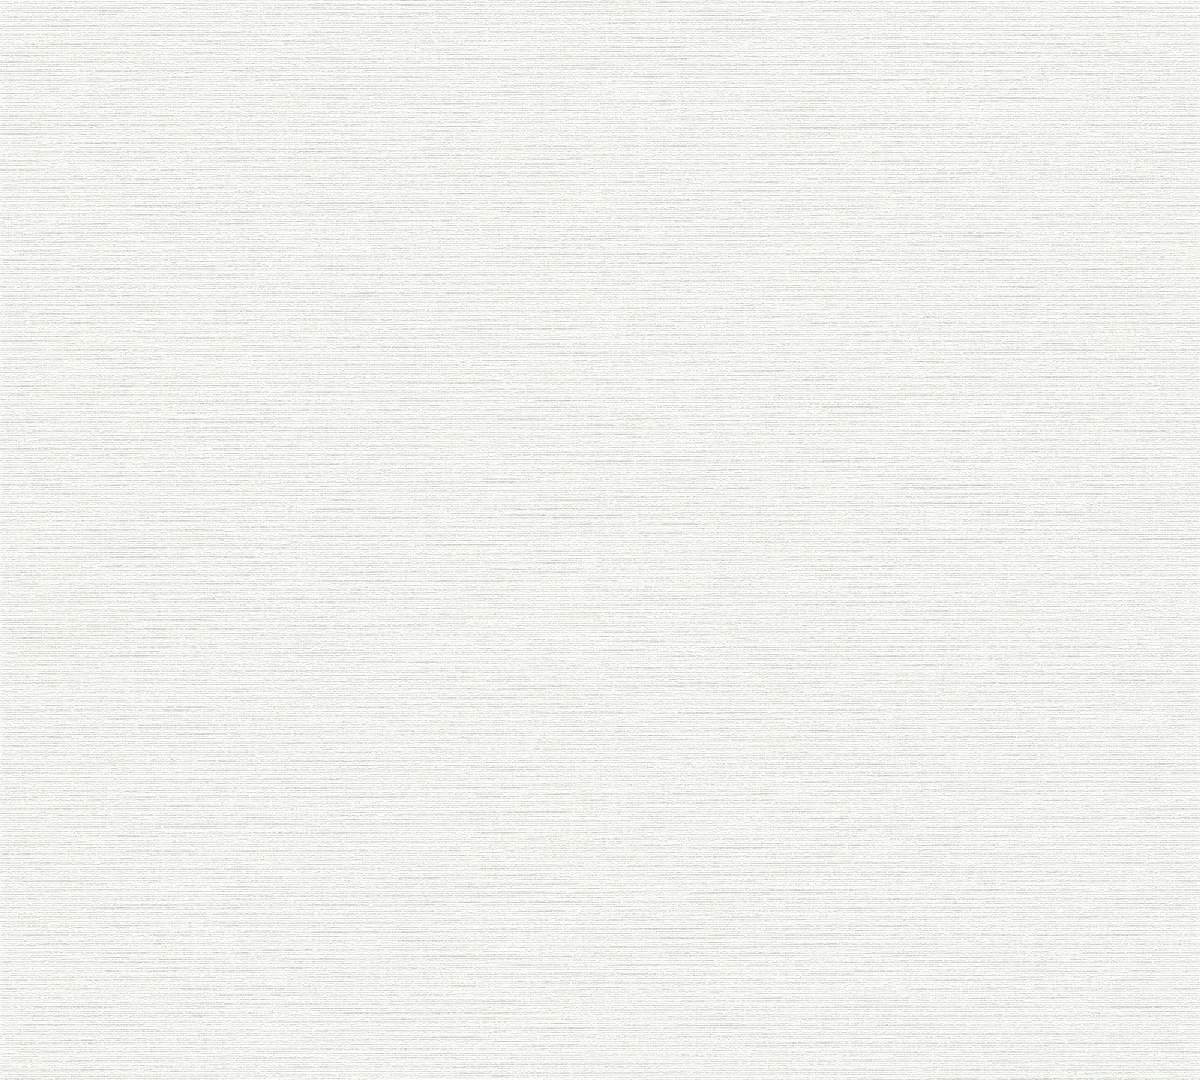 Vliestapete House of Turnowsky 389033 - einfarbige Tapete Muster - Weiß, Creme